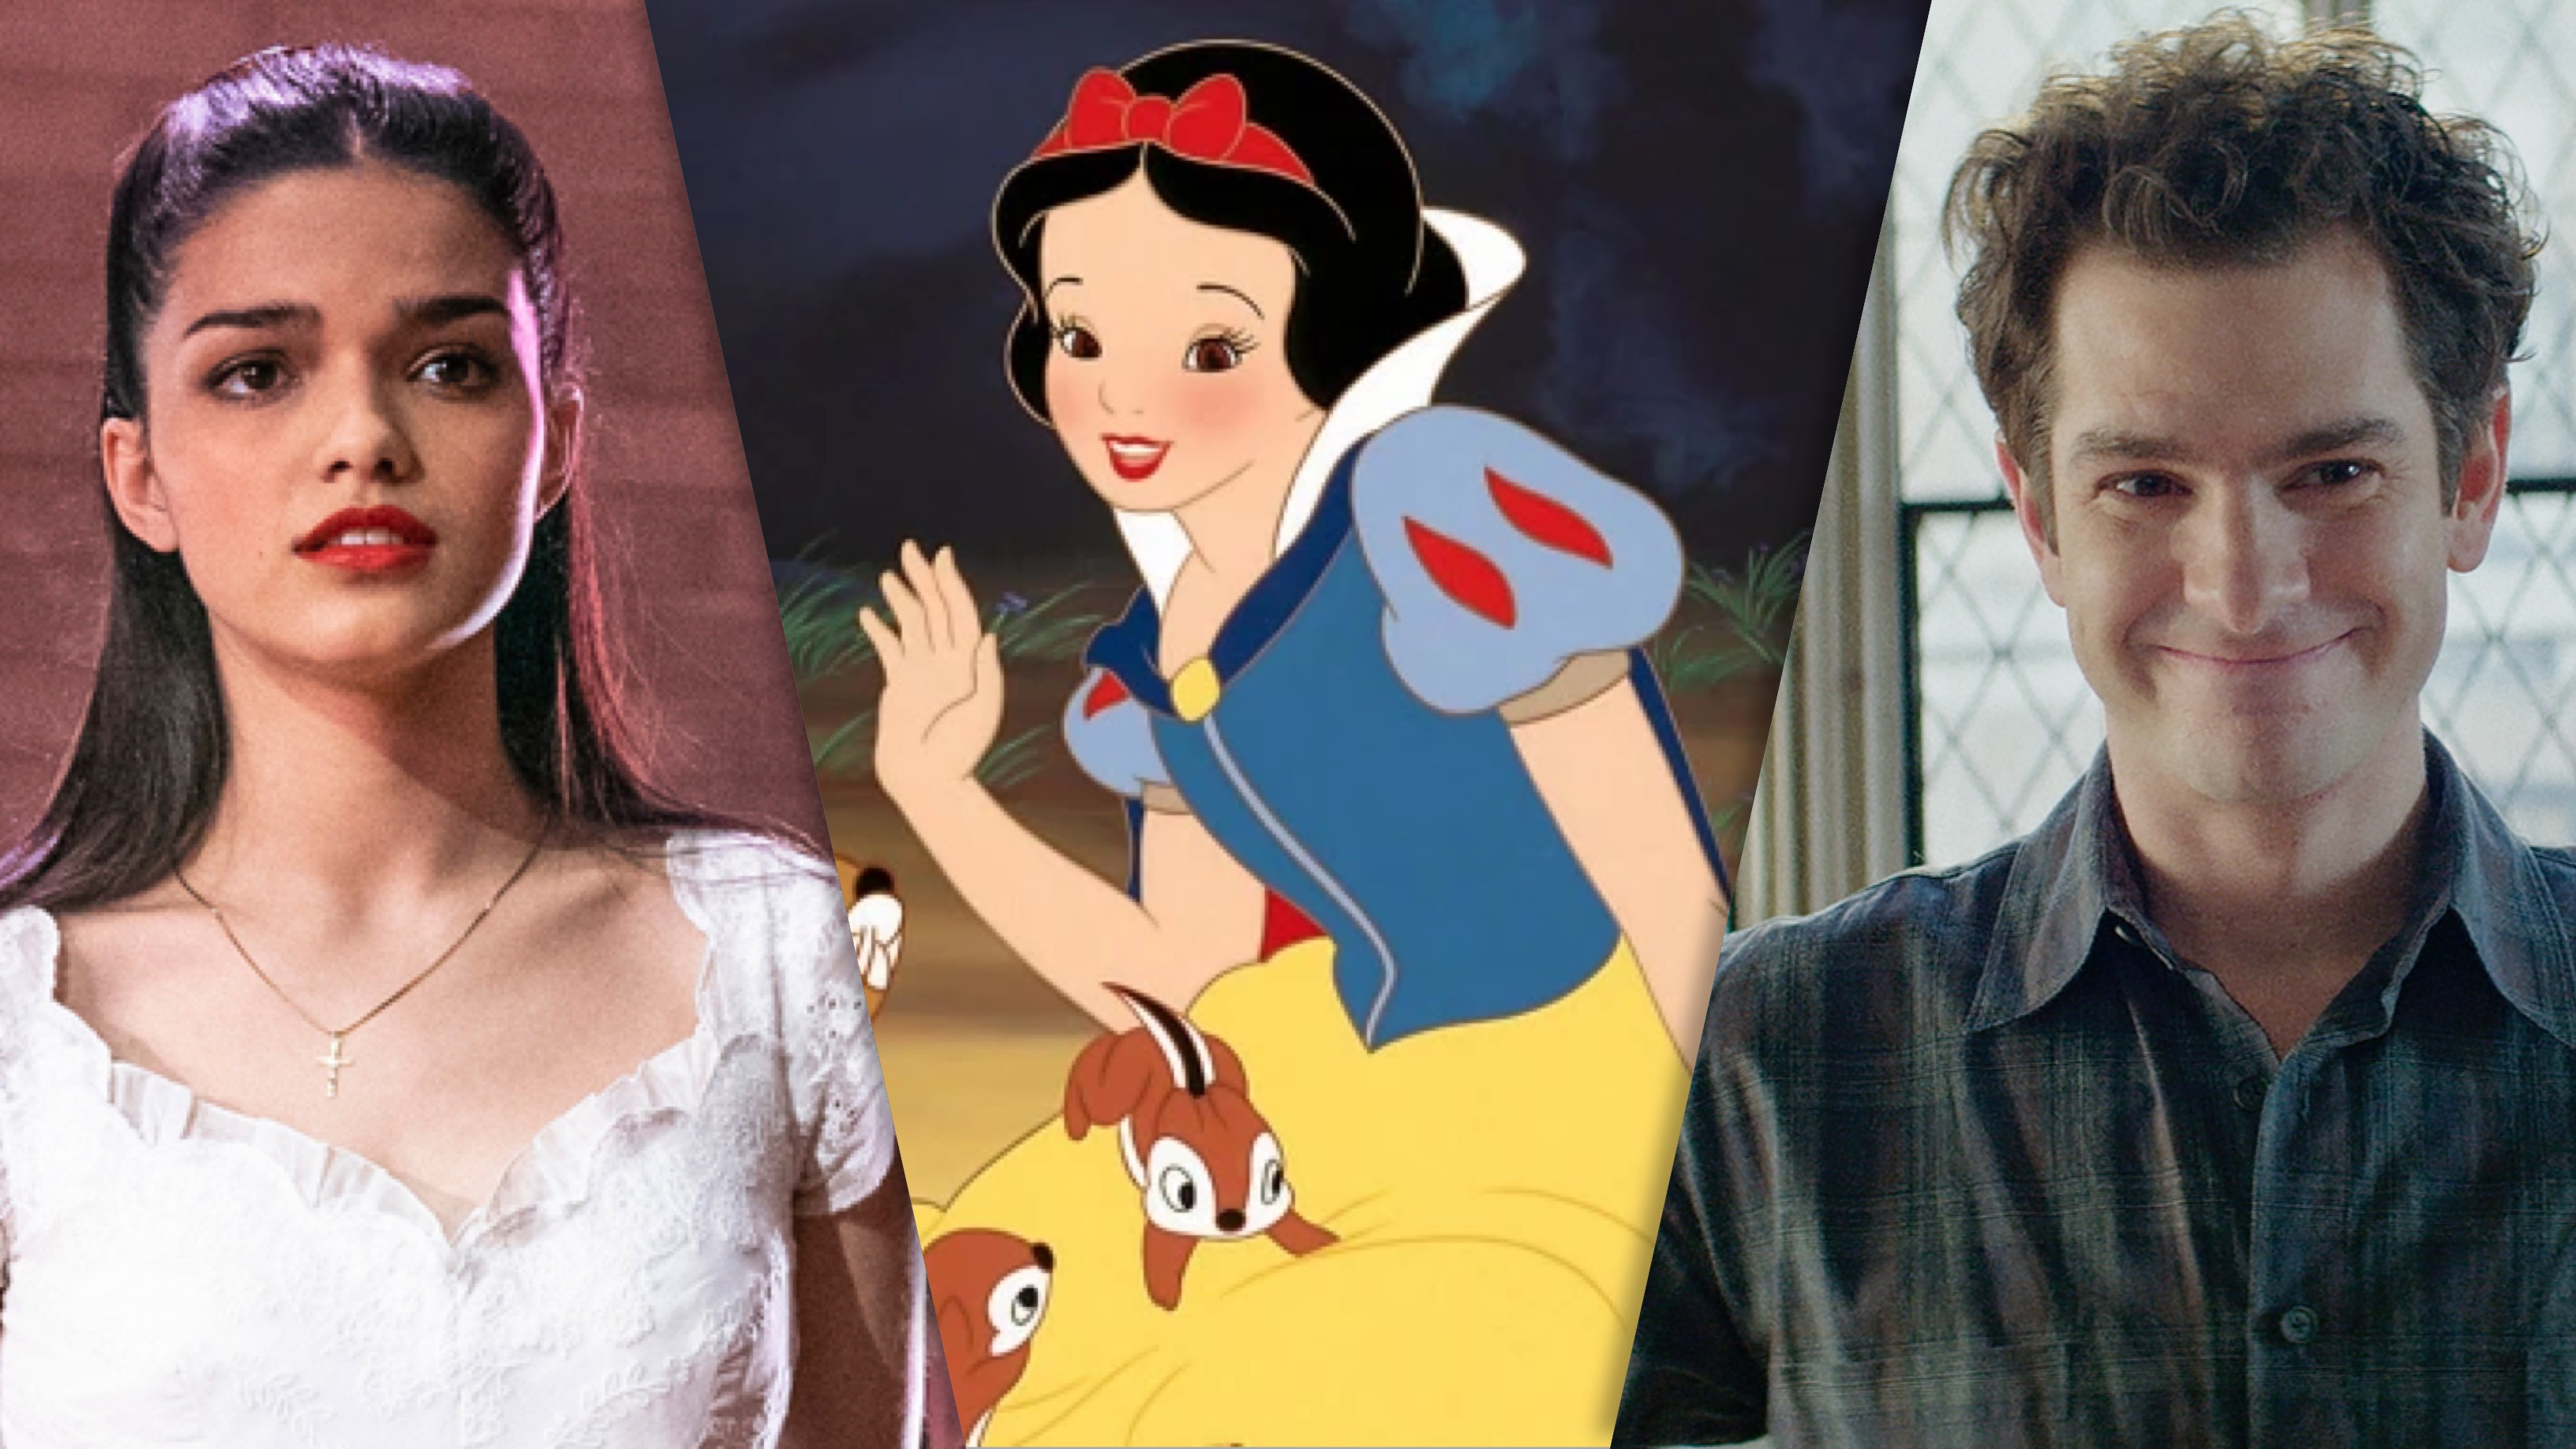 Rachel Zegler Talks ‘Snow White’ With Andrew Garfield